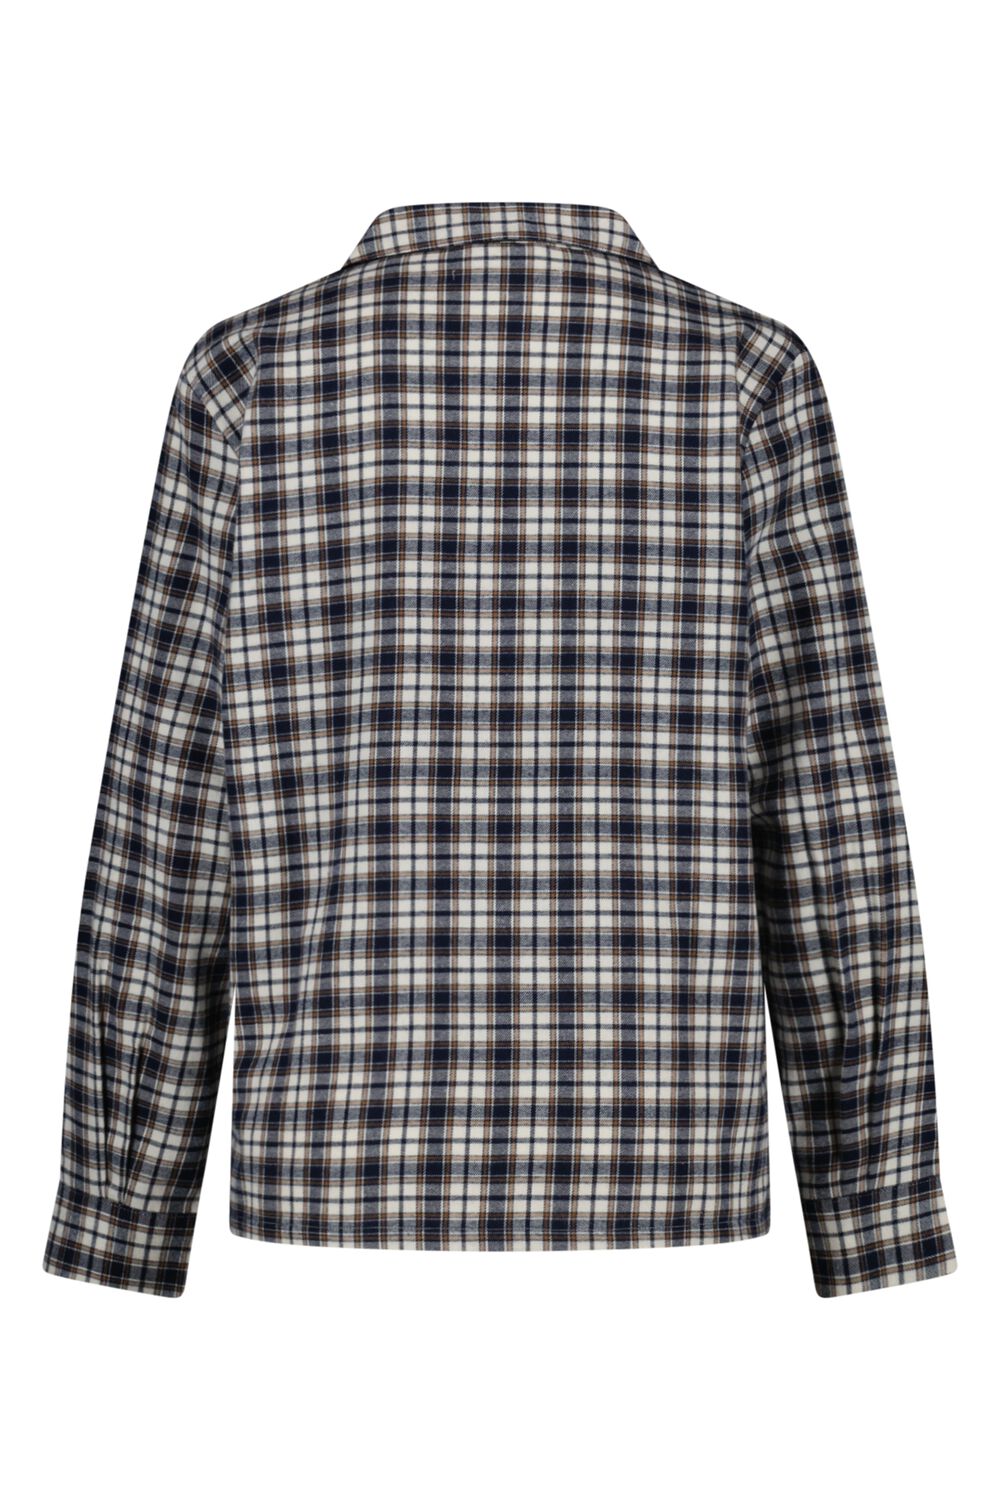 America Today Dames Pyjama Labello Shirt Bruin